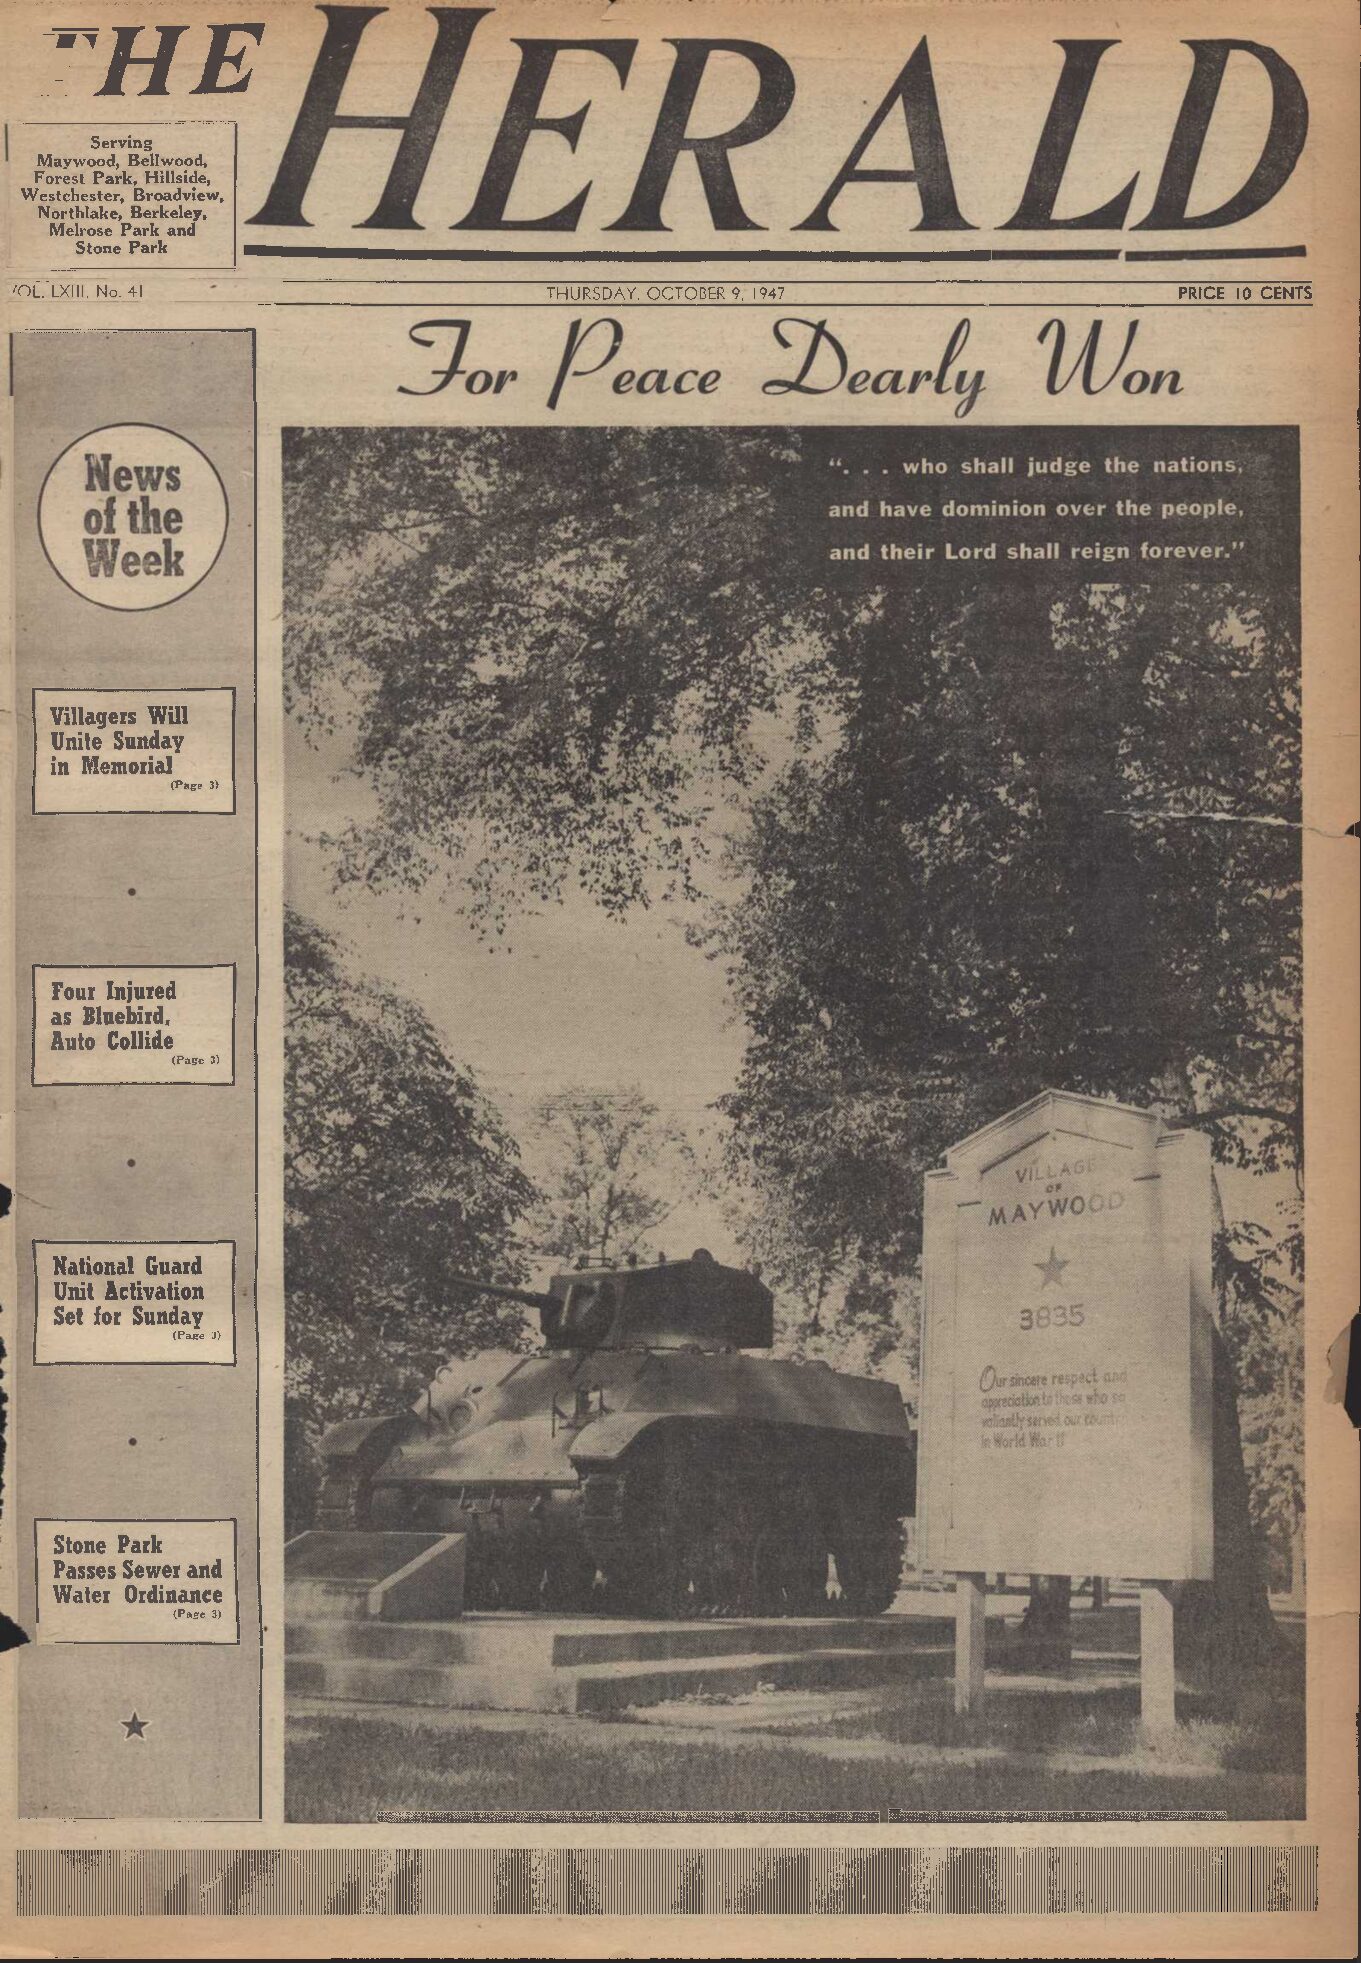 The Herald – 19471009